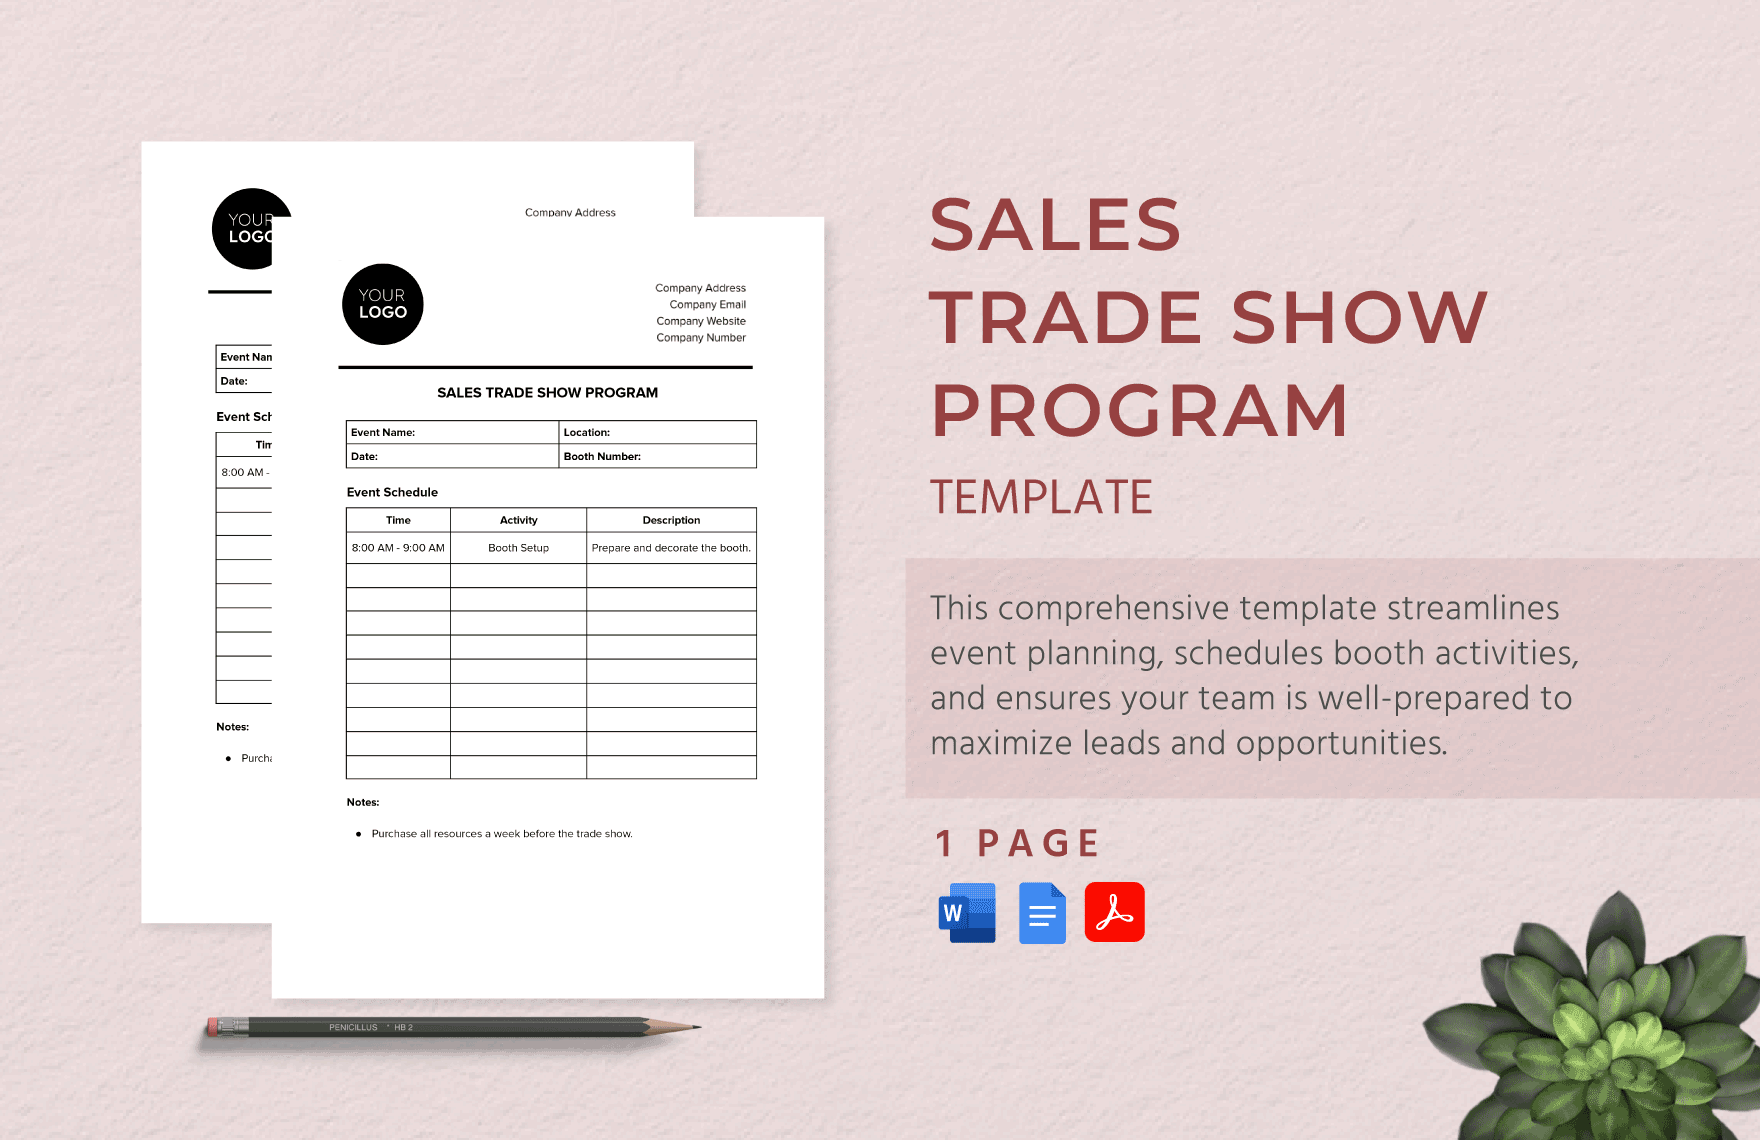 Sales Trade Show Program Template in Word, Google Docs, PDF